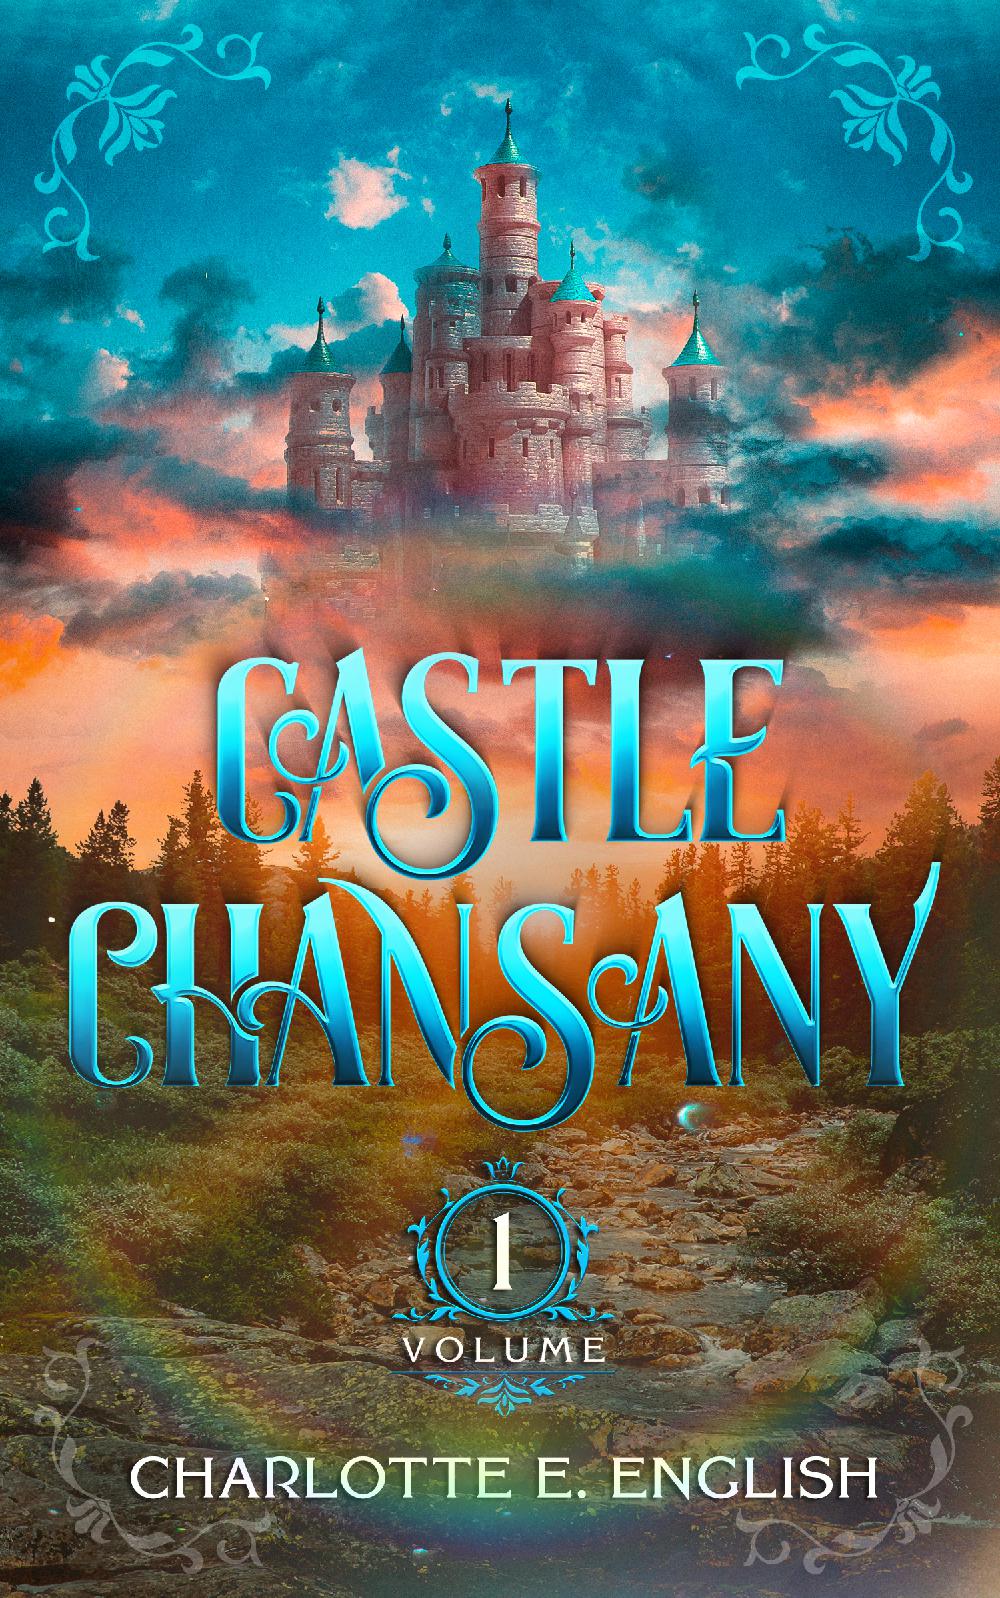 Castle Chansany, Volume 1